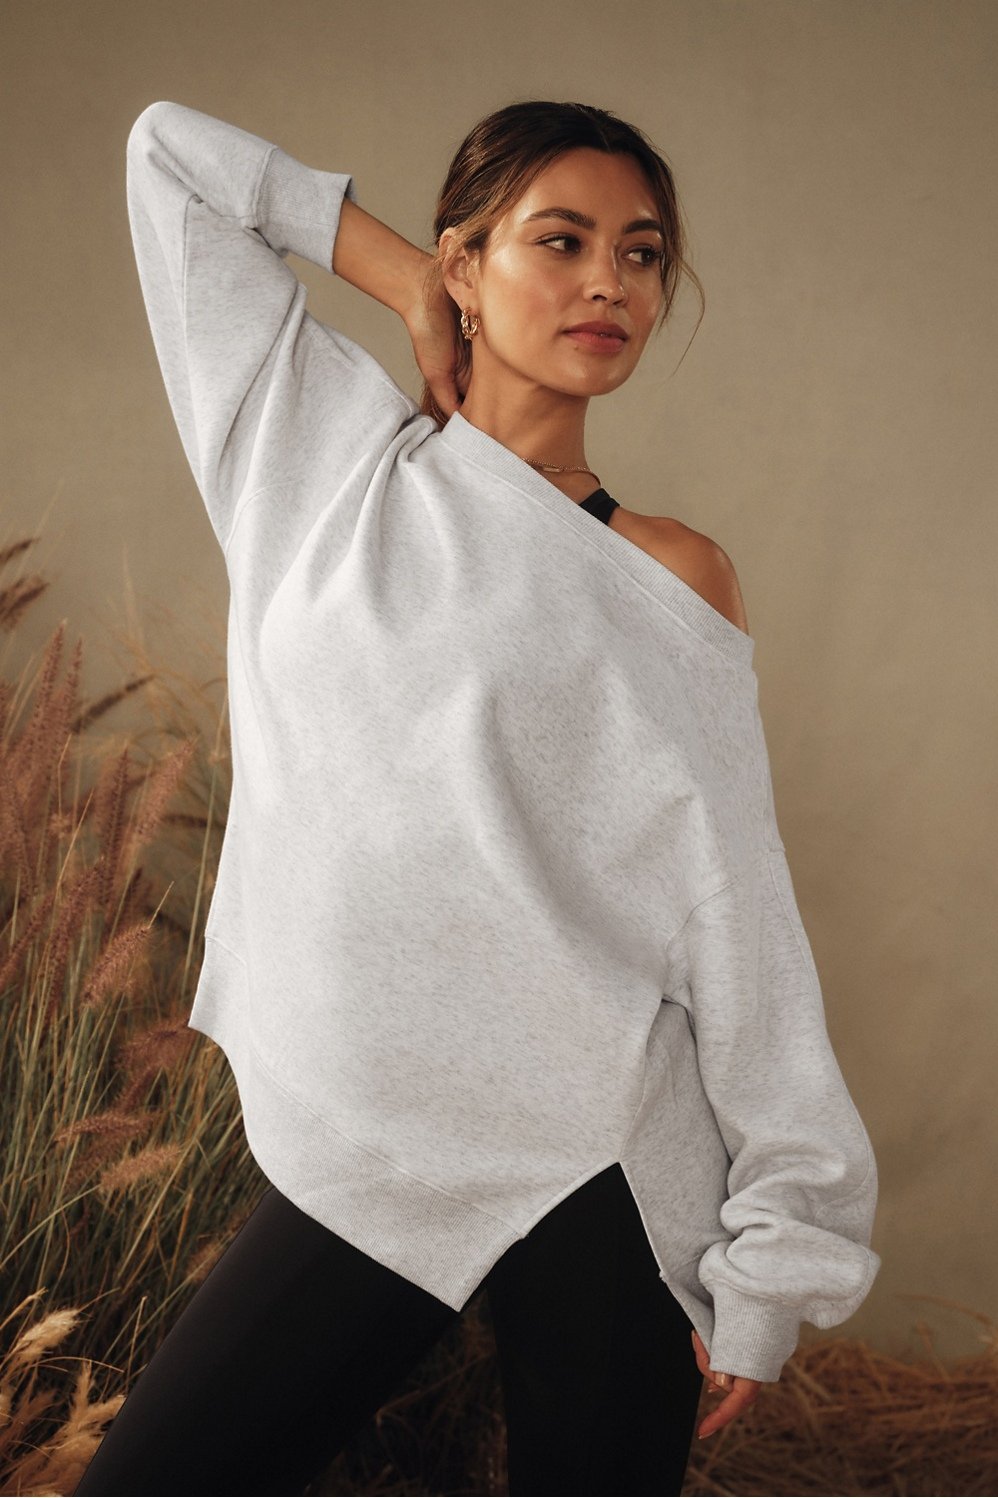 Qleicom Fall Fashion Sweatshirts for Women Oversized Fleece